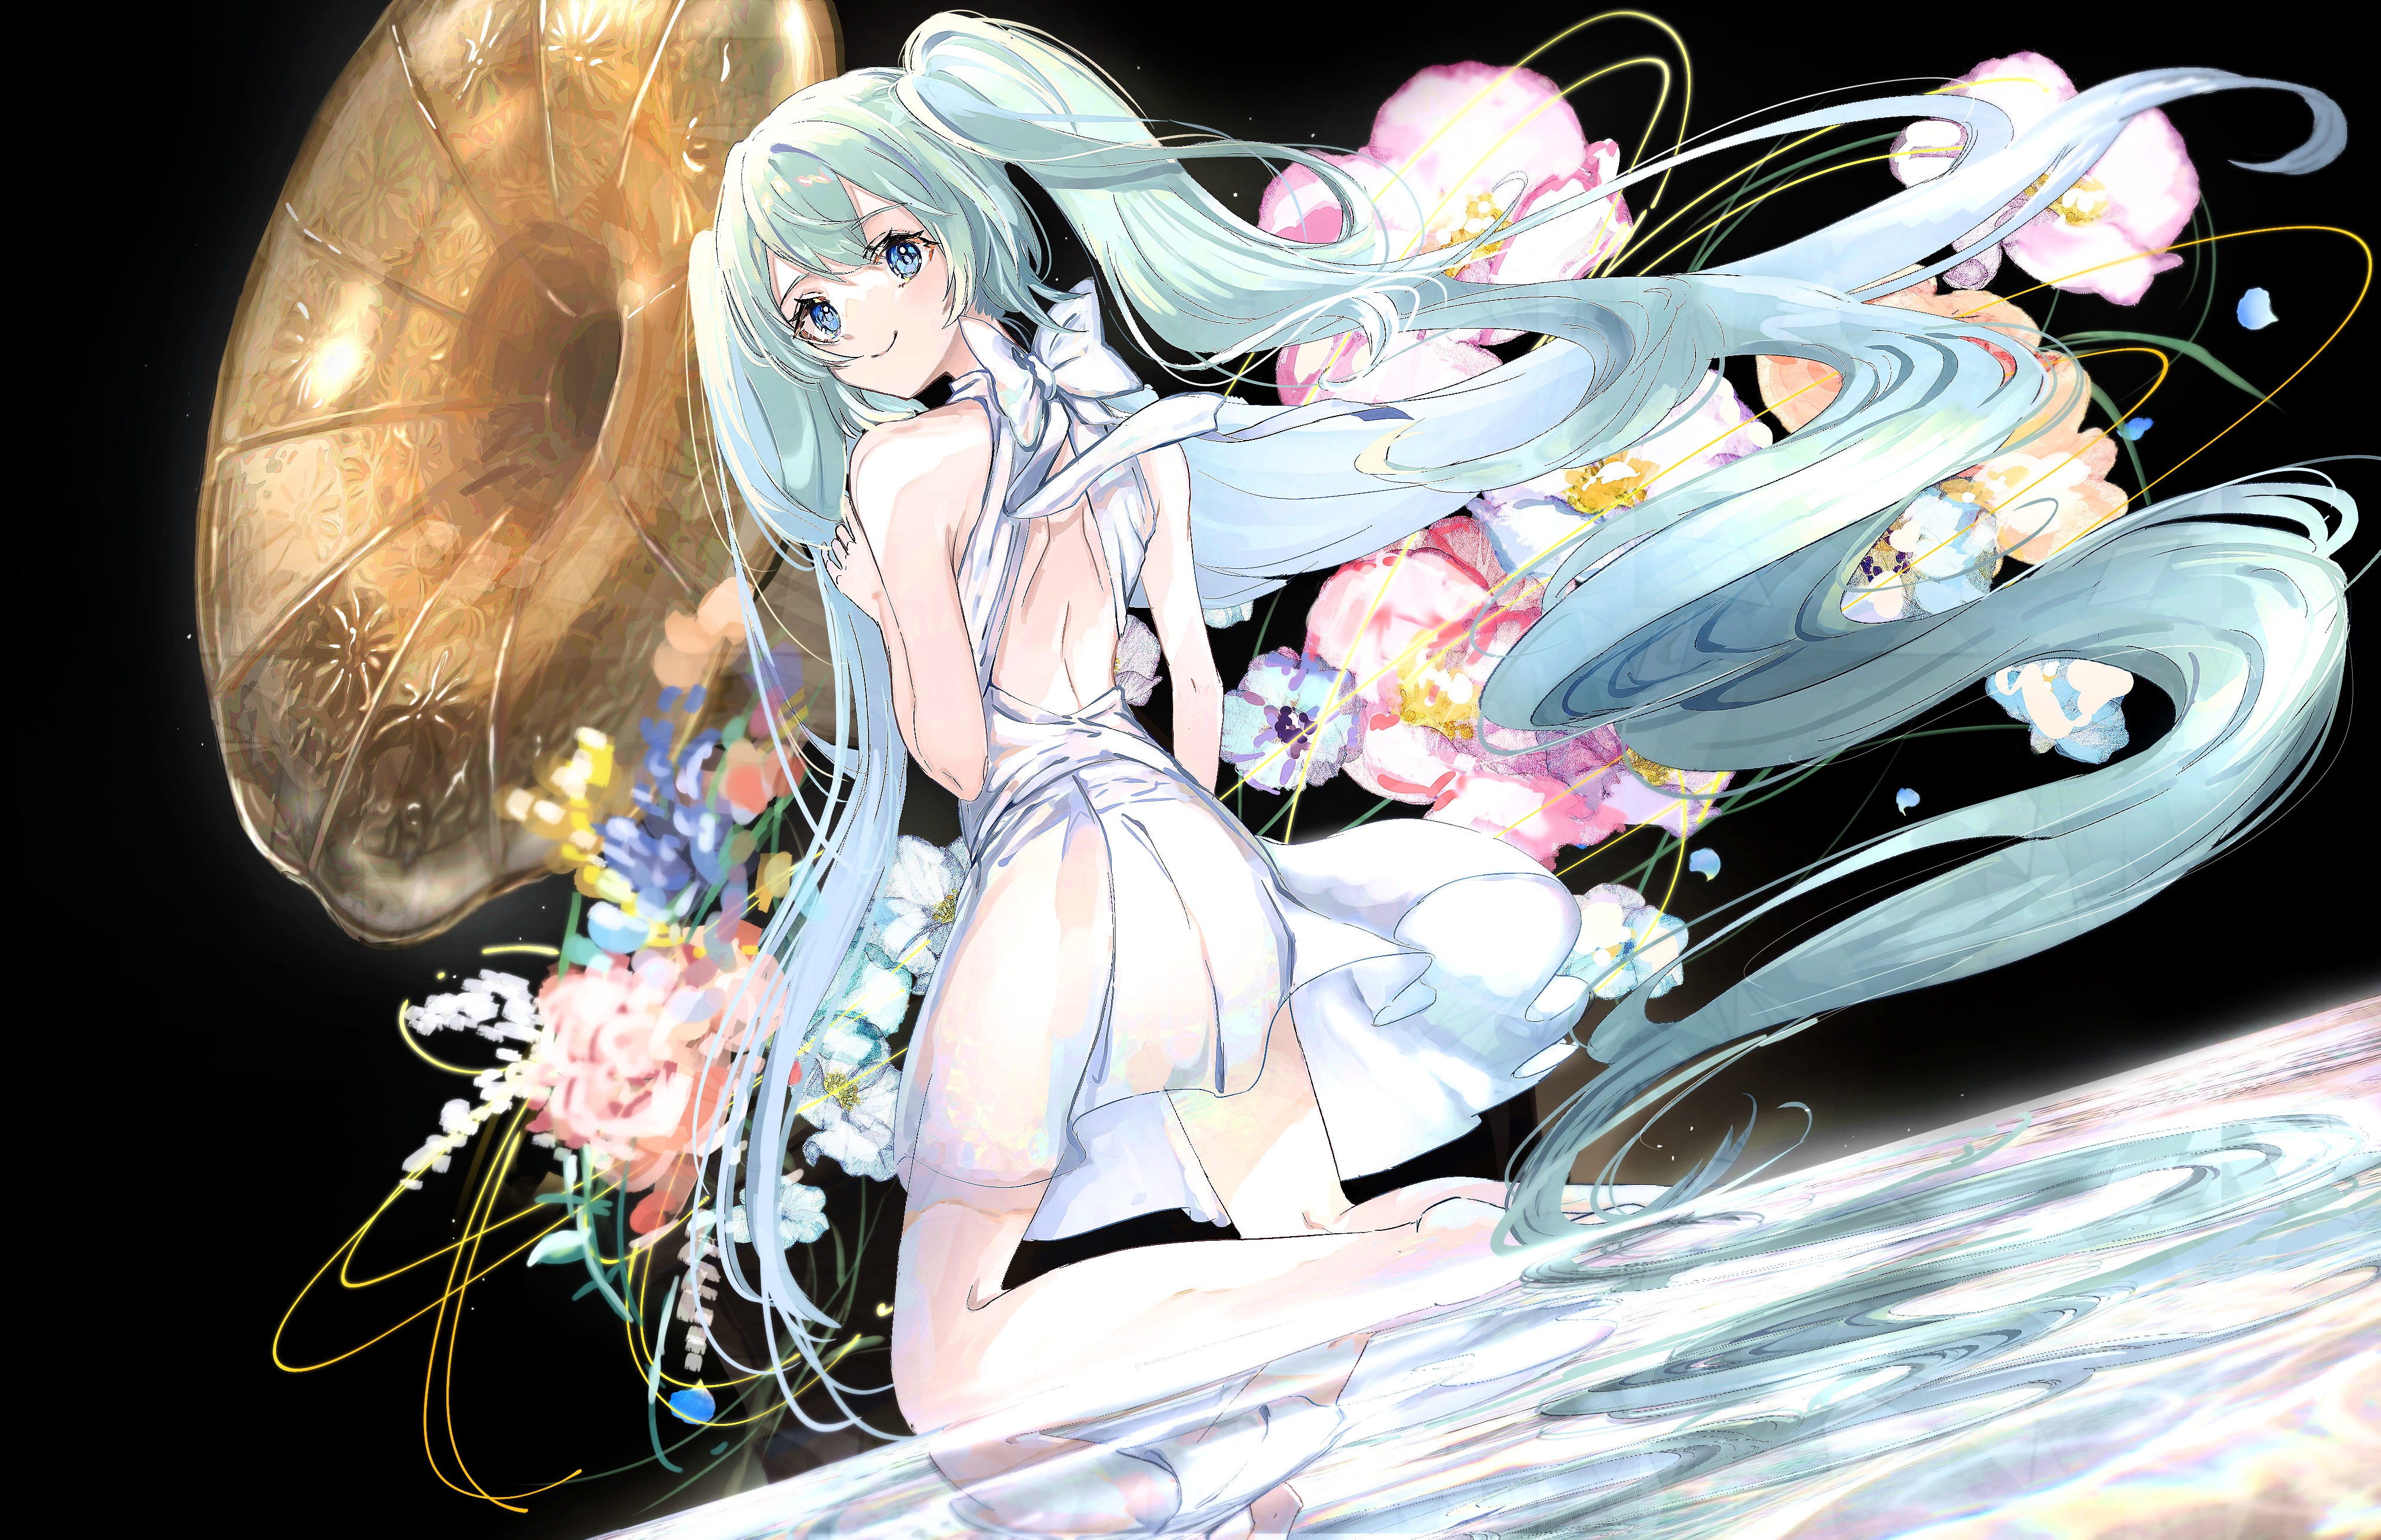 Anime 4043x2615 anime anime girls cyan hair smiling long hair blue eyes kneeling flowers black background looking over shoulder